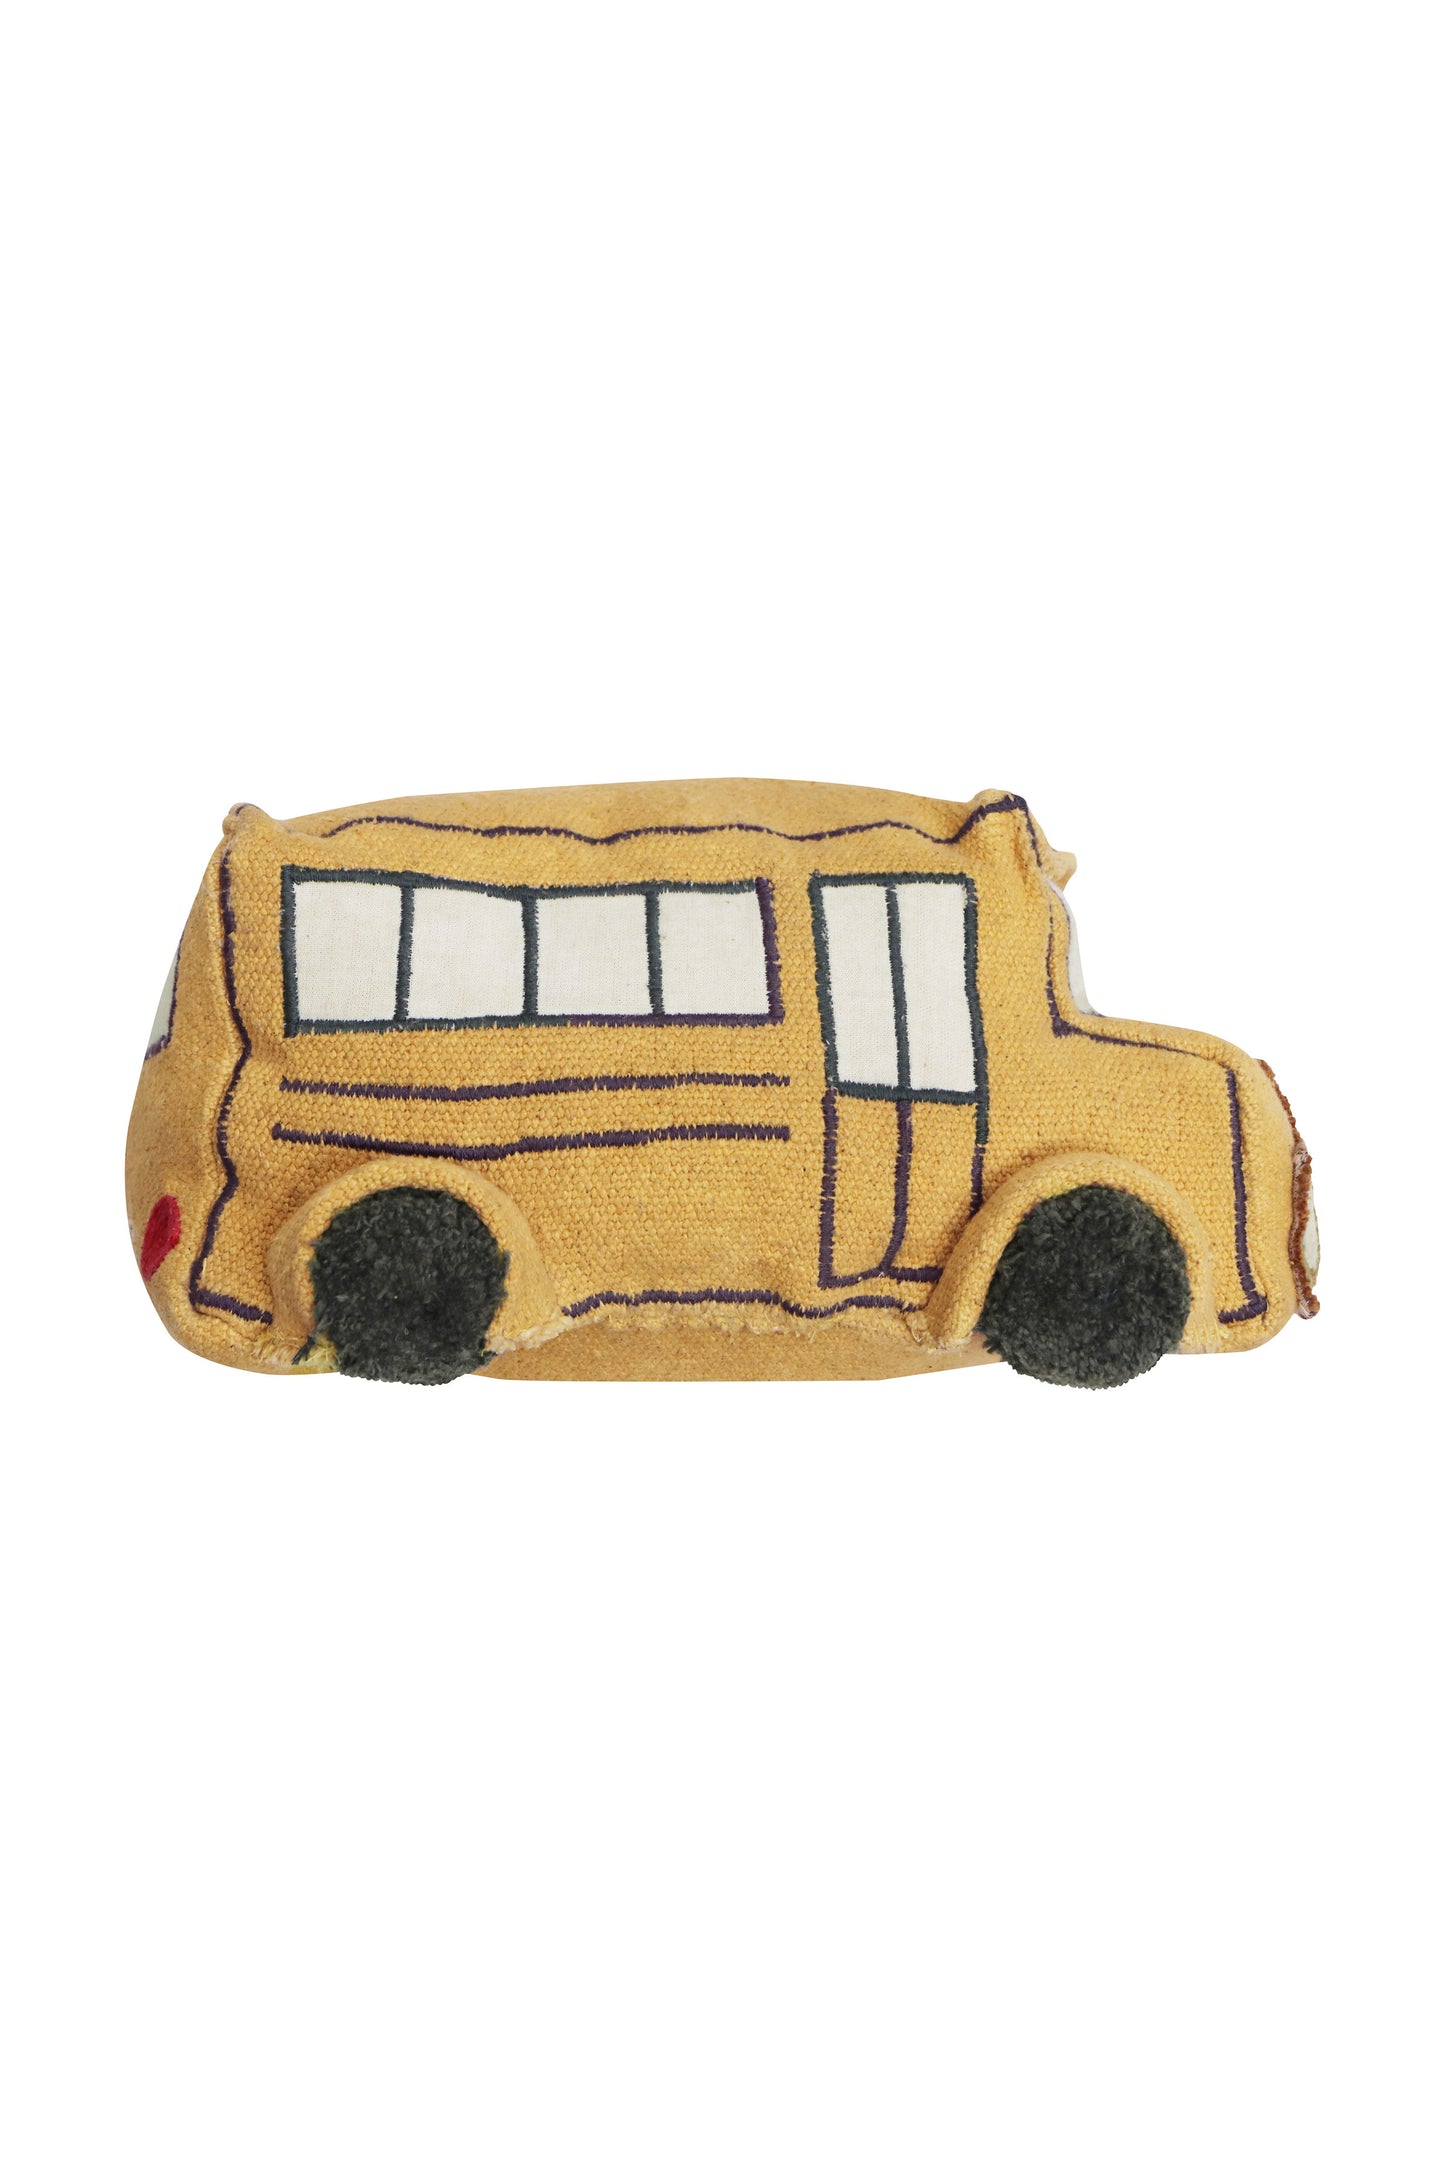 Drop Down School Bus